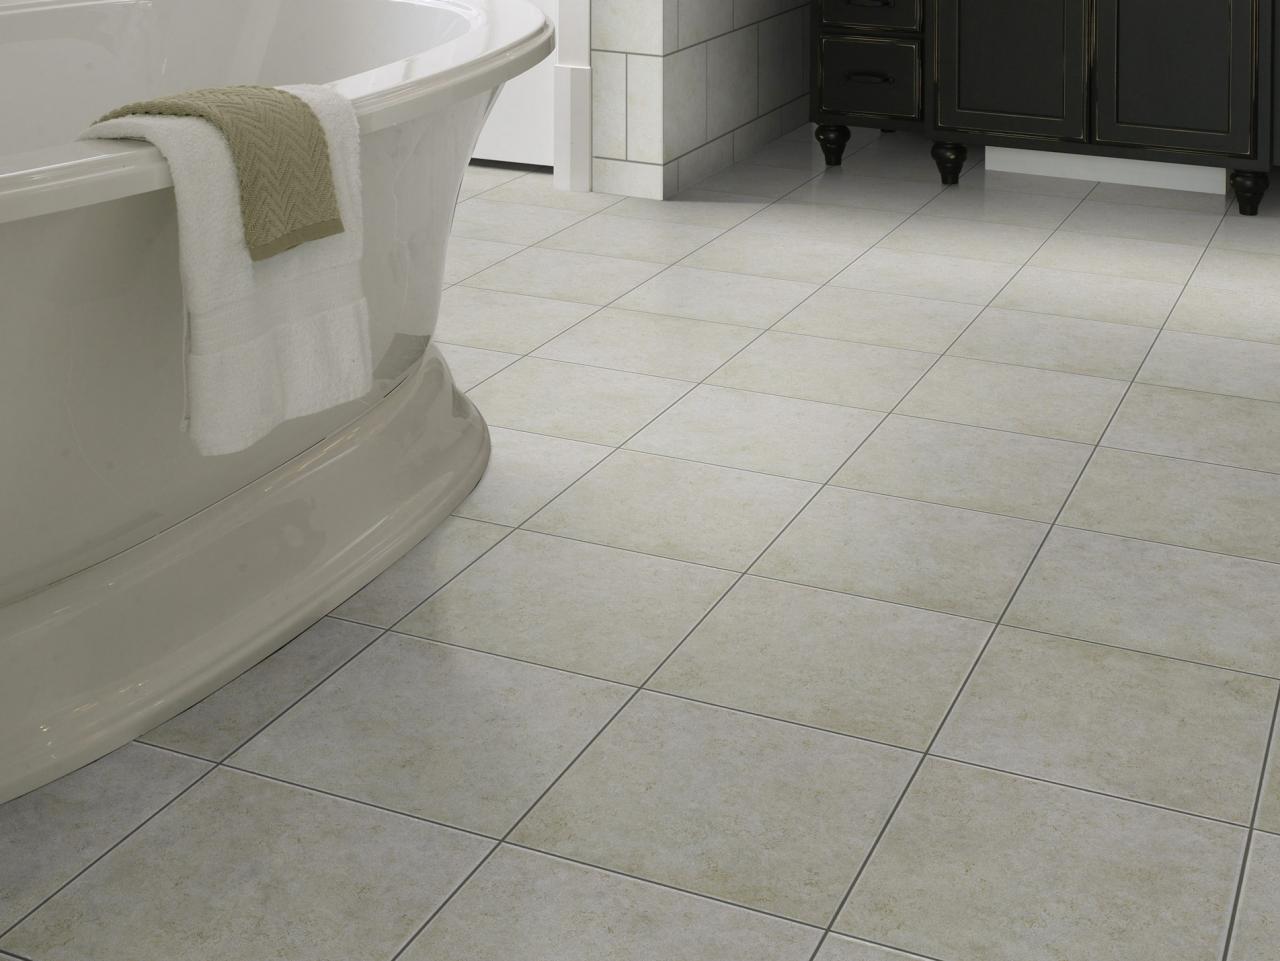 Why Homeowners Love Ceramic Tile, Tile For Bathroom Floor